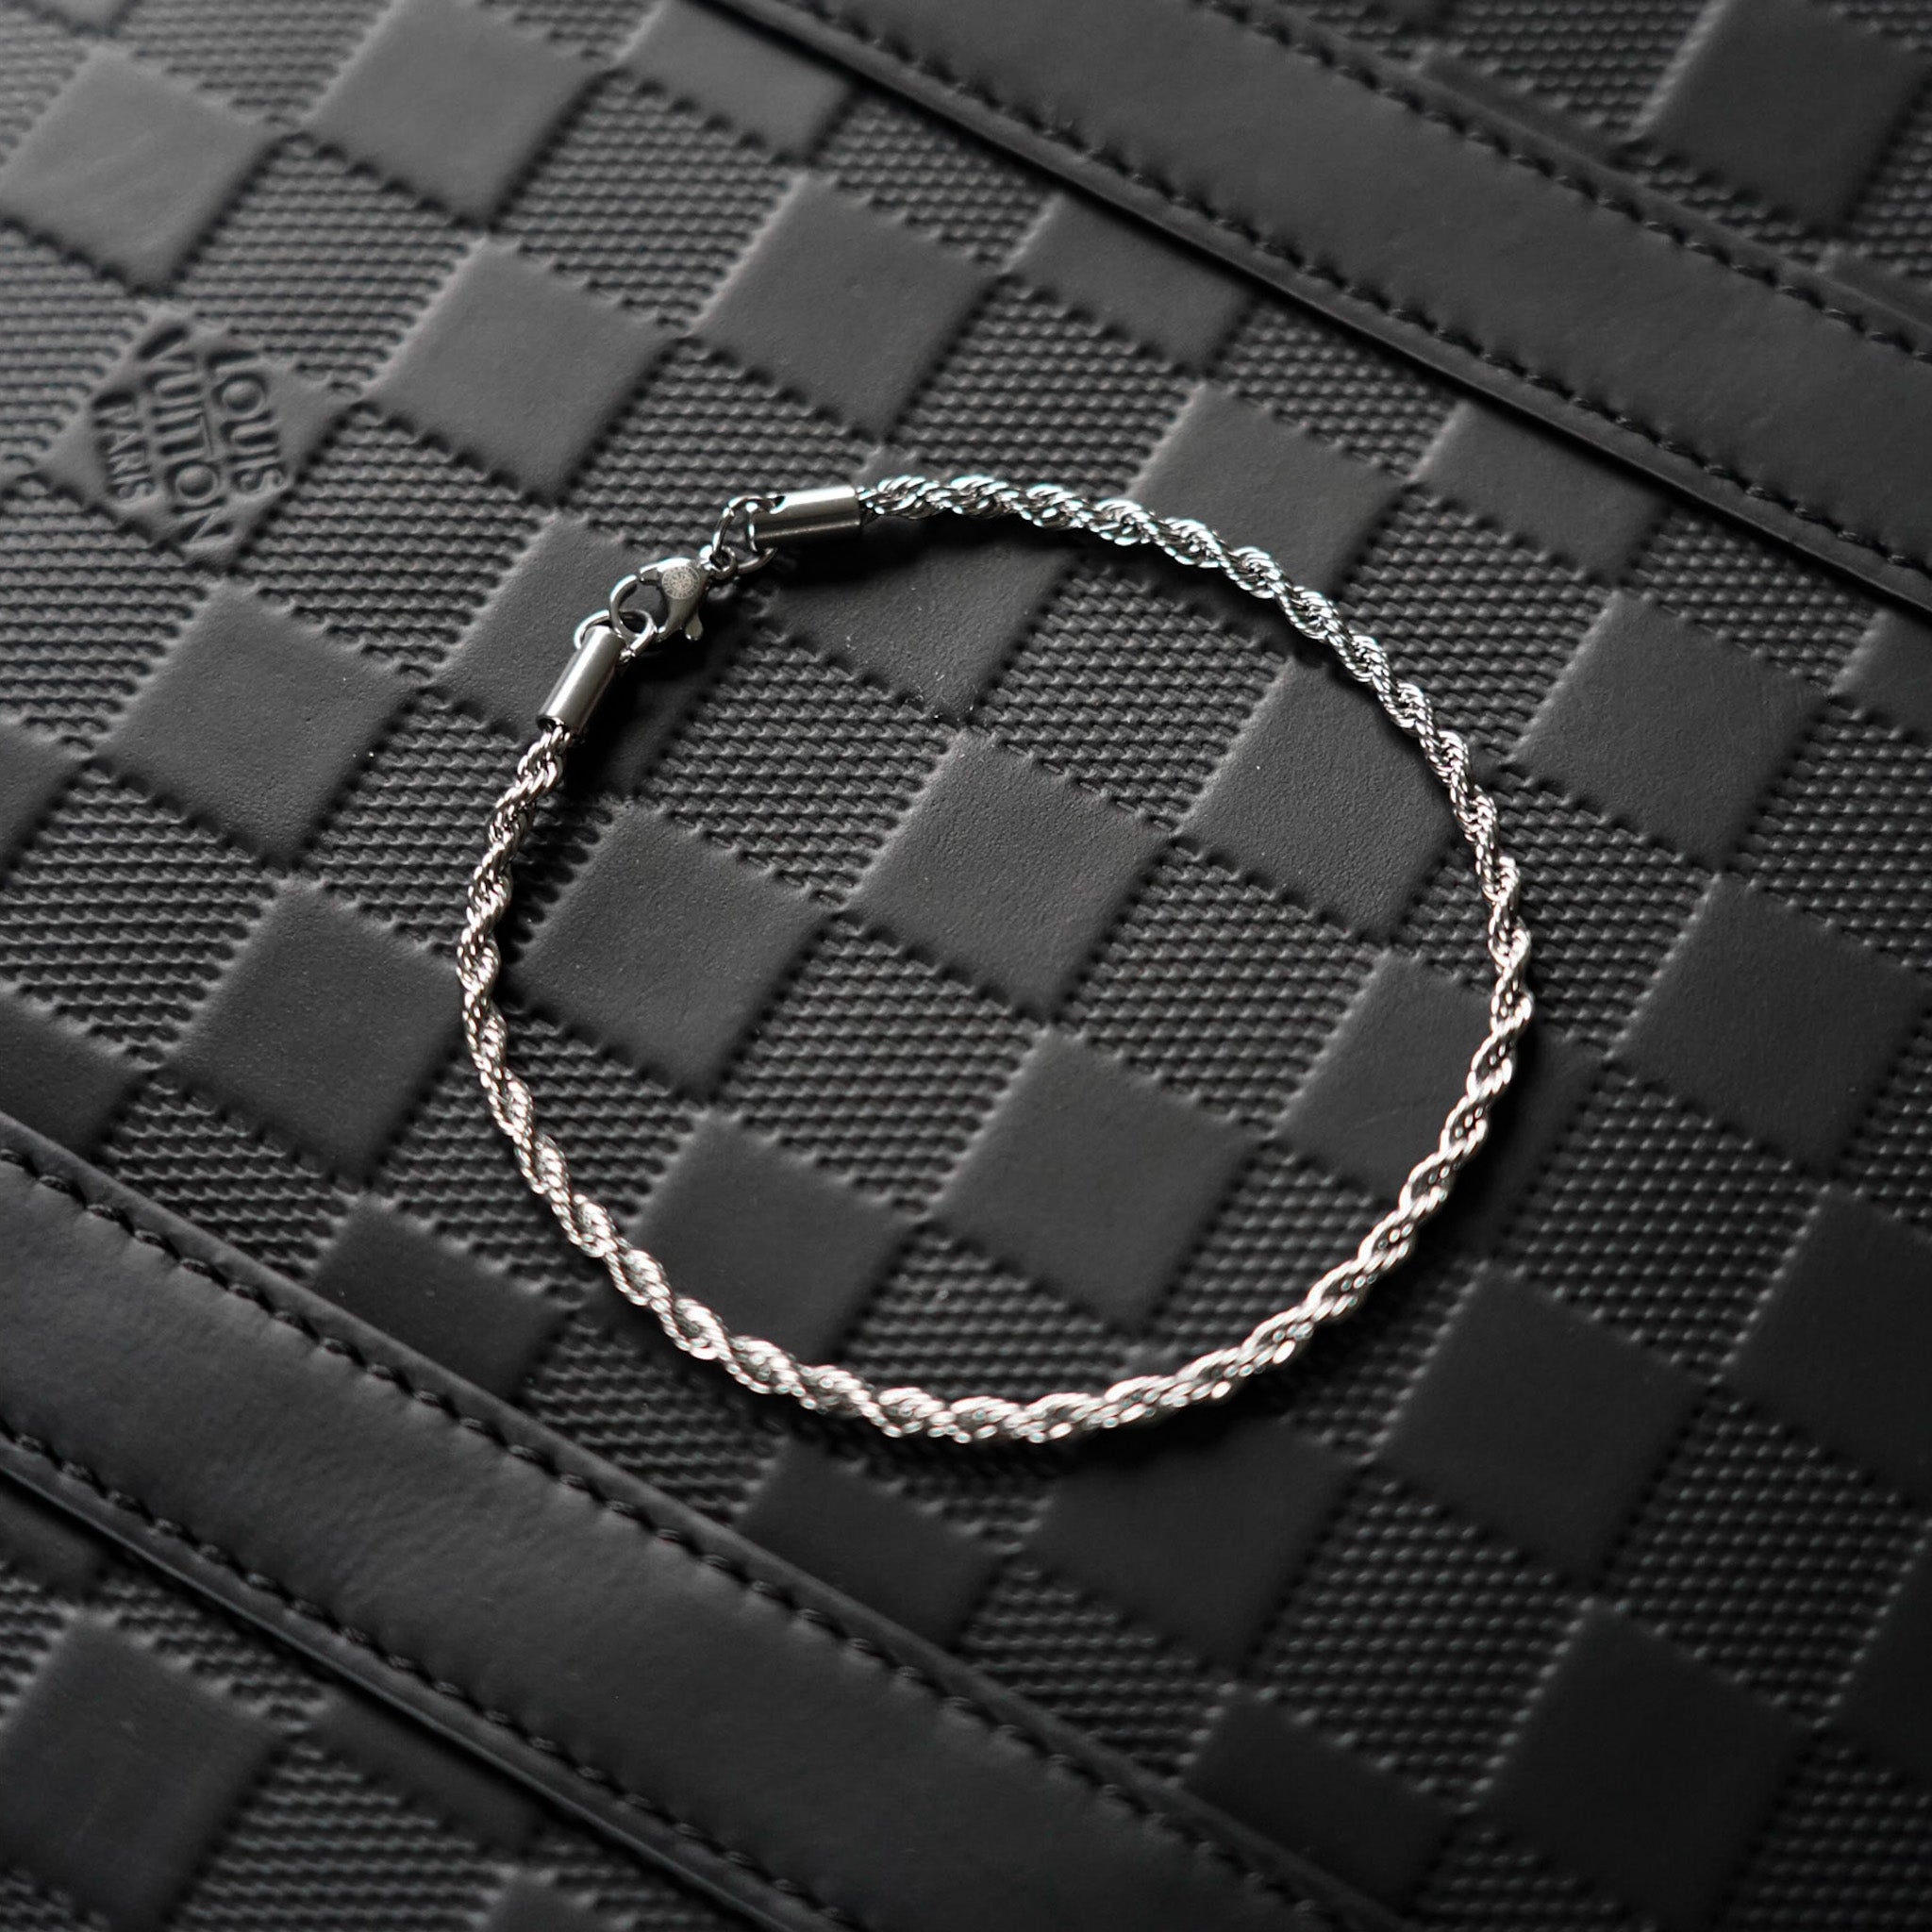 NL Rope bracelet - Silver-toned